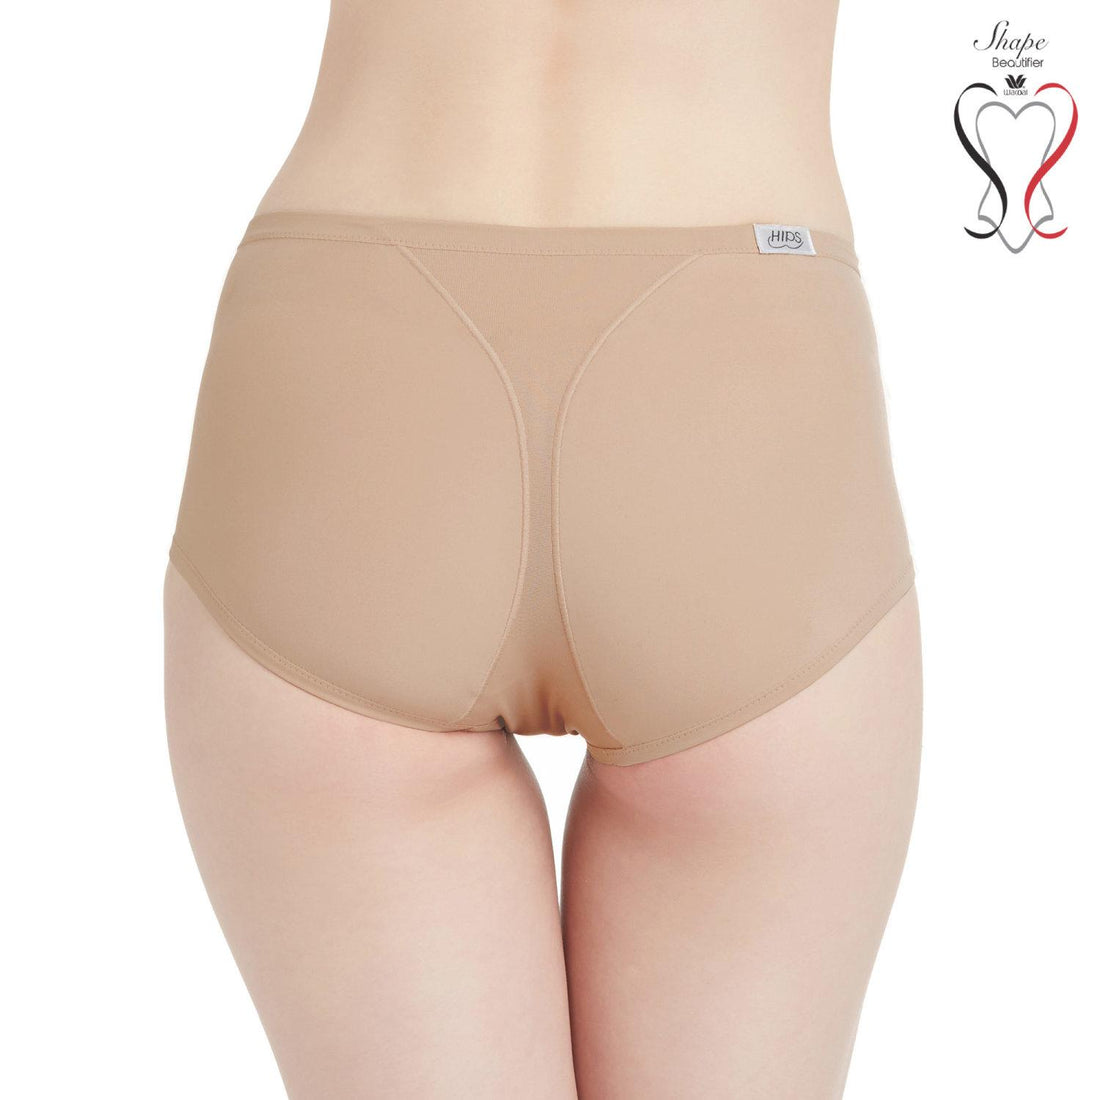 Wacoal Shapewear Hips hip lifting pants and beautiful buttocks, model  WY1129, ovaltine color (OT)